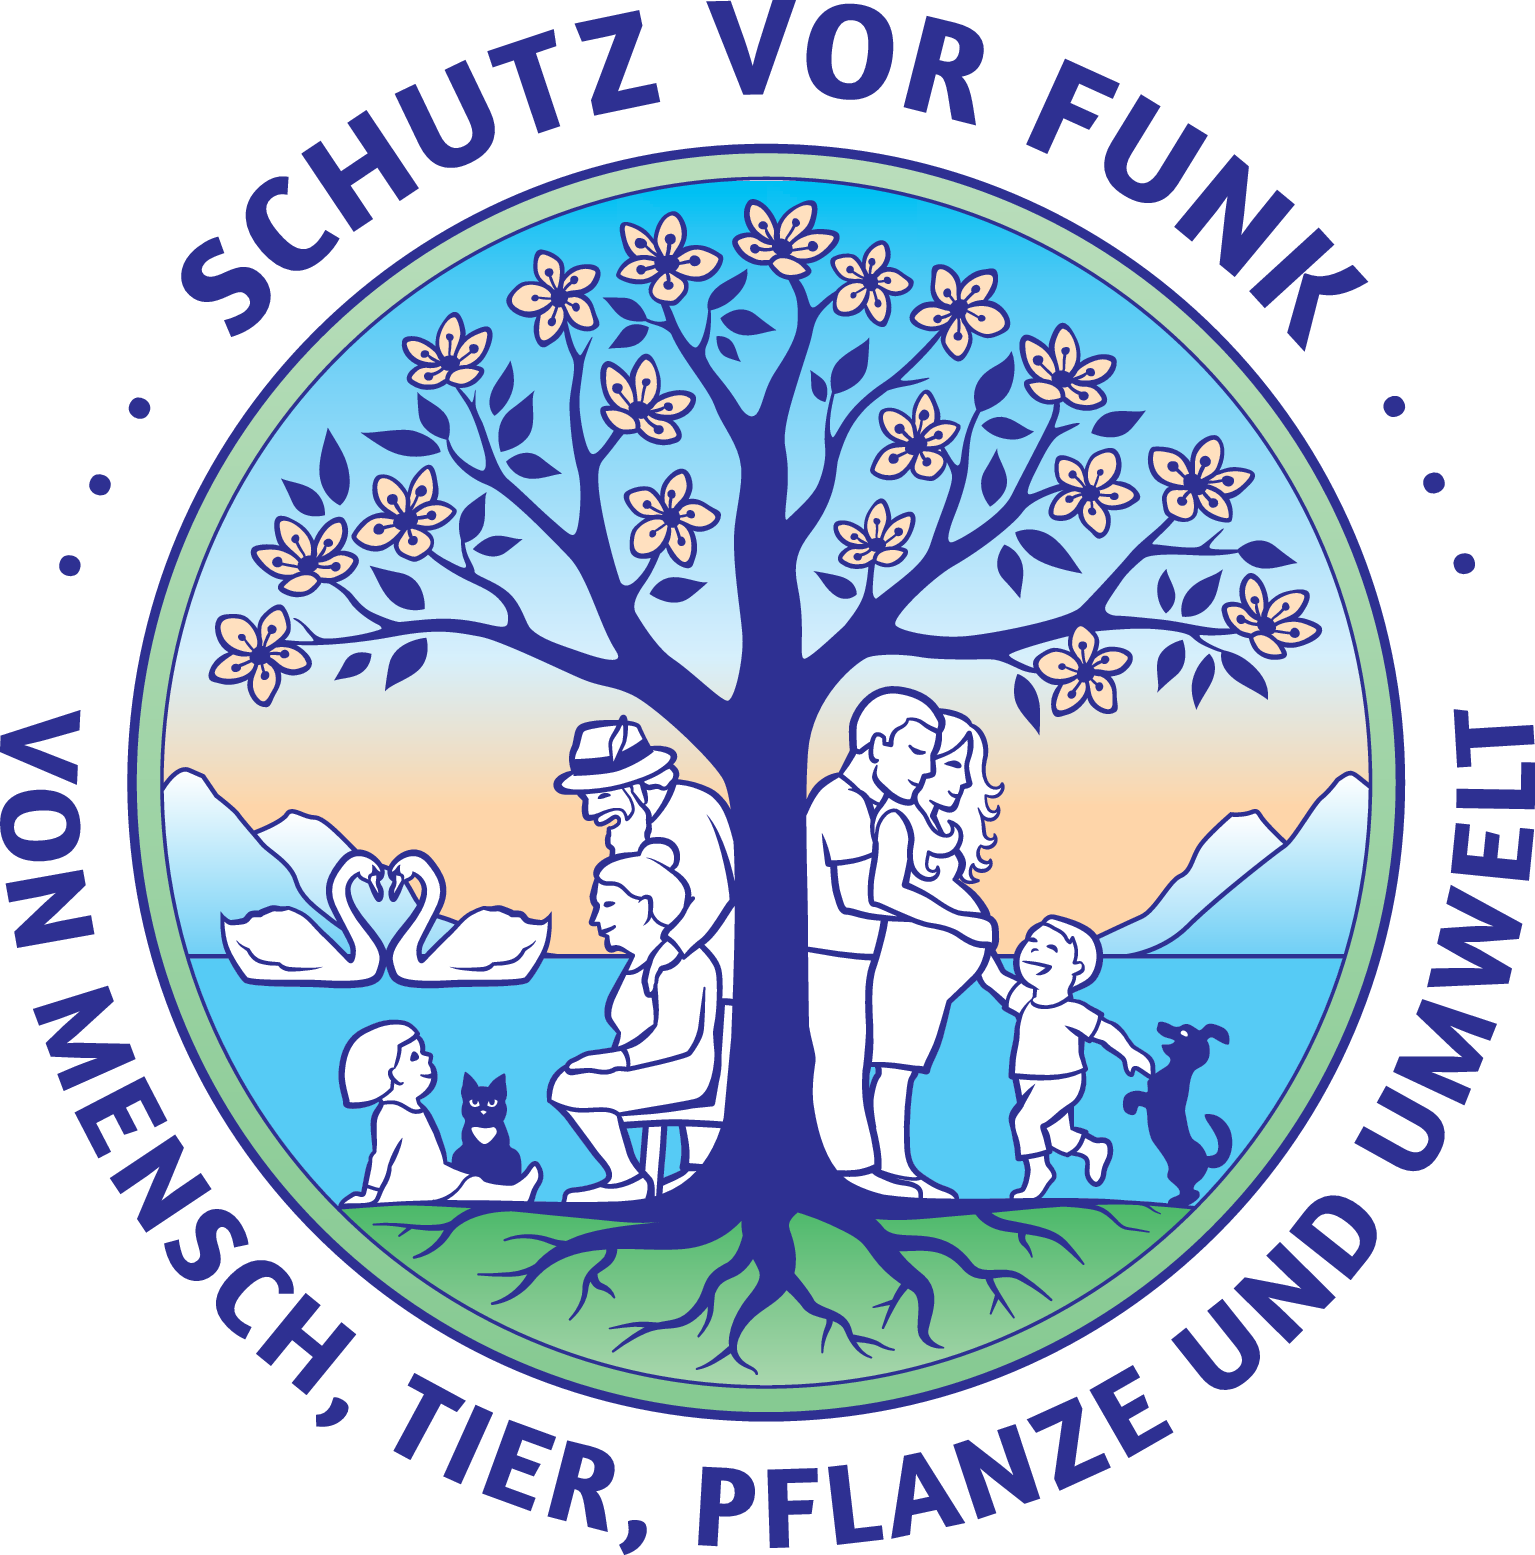 Logo_Schutz-vor-Funk_cmyk300dpi_Print